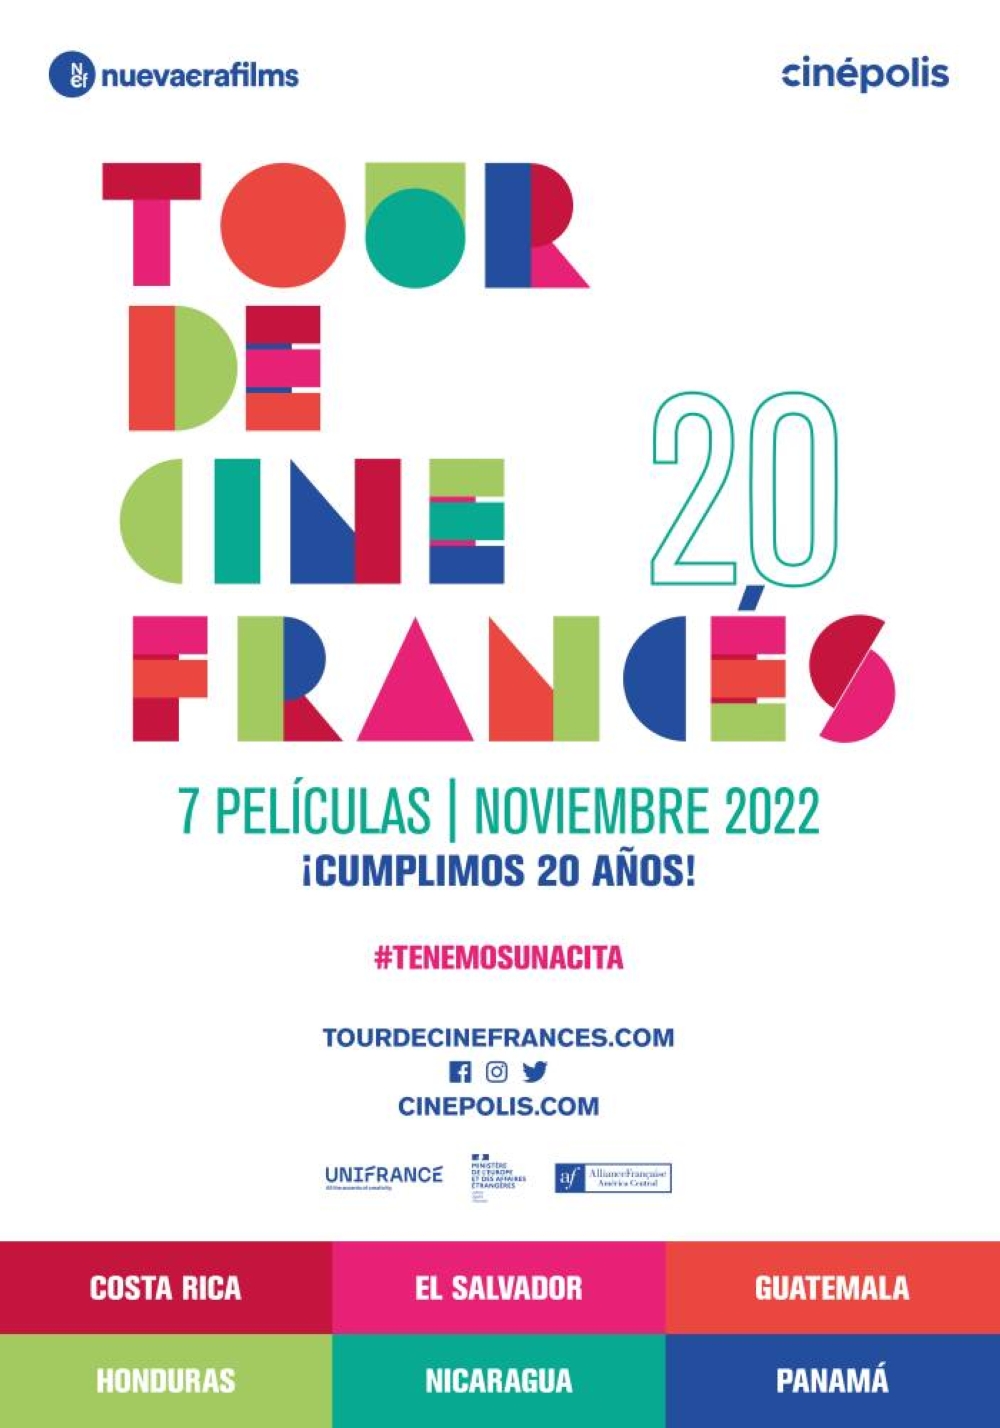 French cinema tour 2022